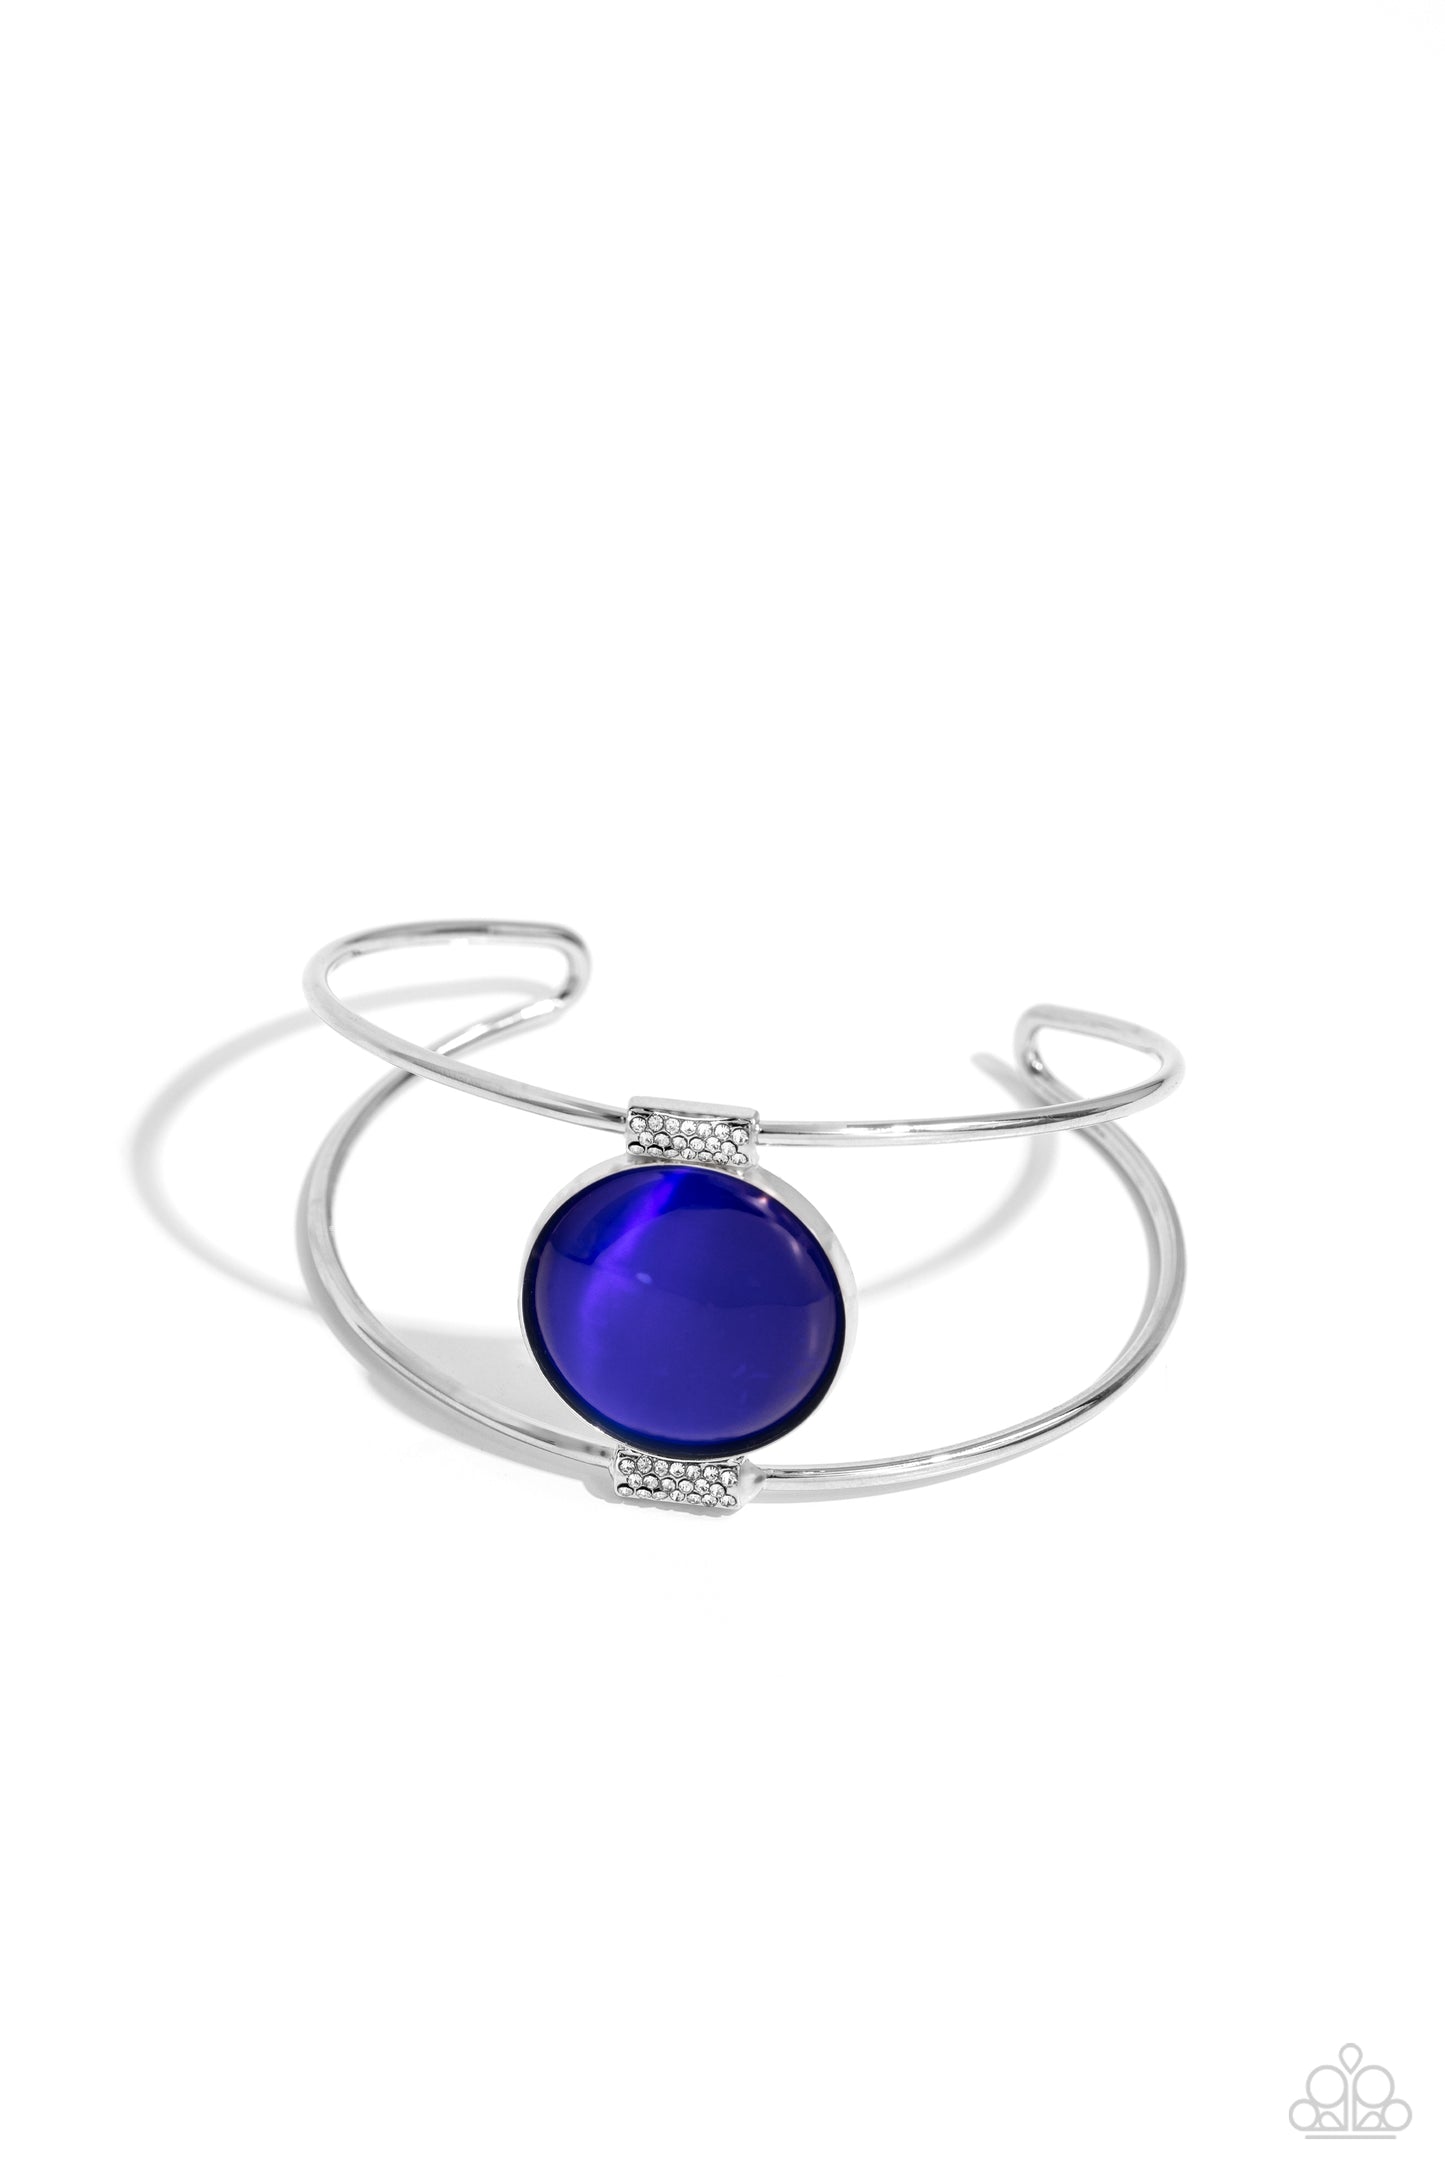 Candescent Cats Eye - blue - Paparazzi bracelet